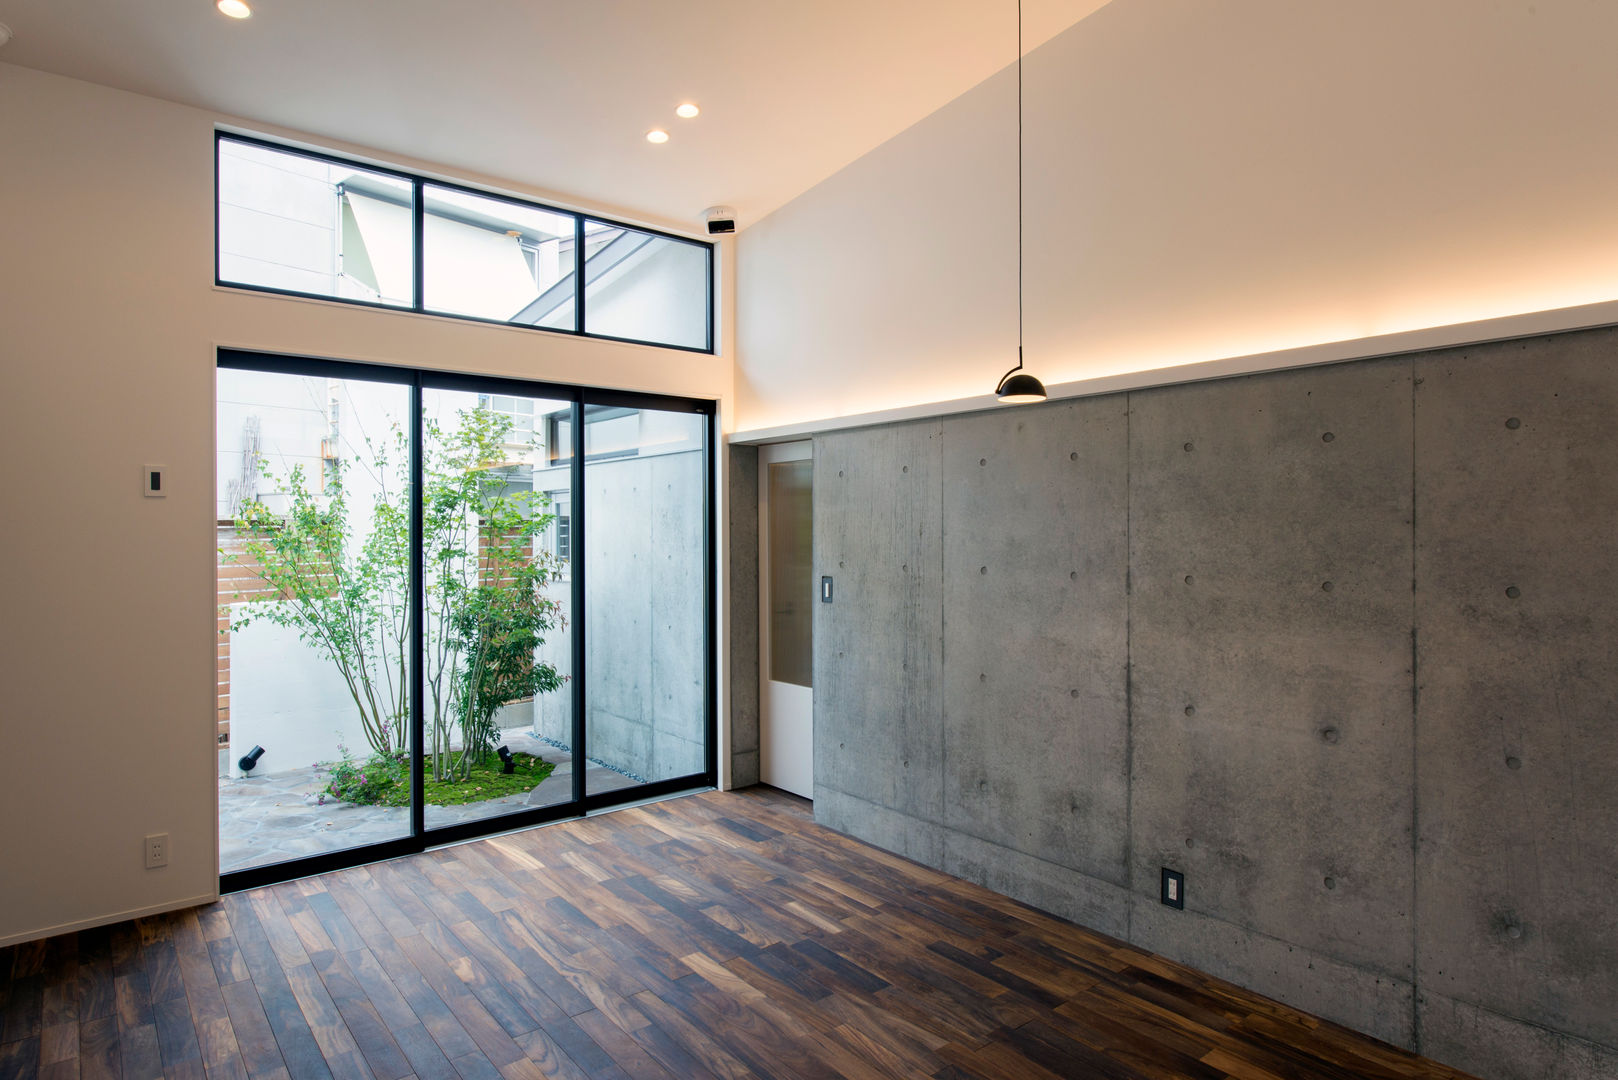 Chigusa Atelier-house, Sakurayama-Architect-Design Sakurayama-Architect-Design Salas multimedia modernas